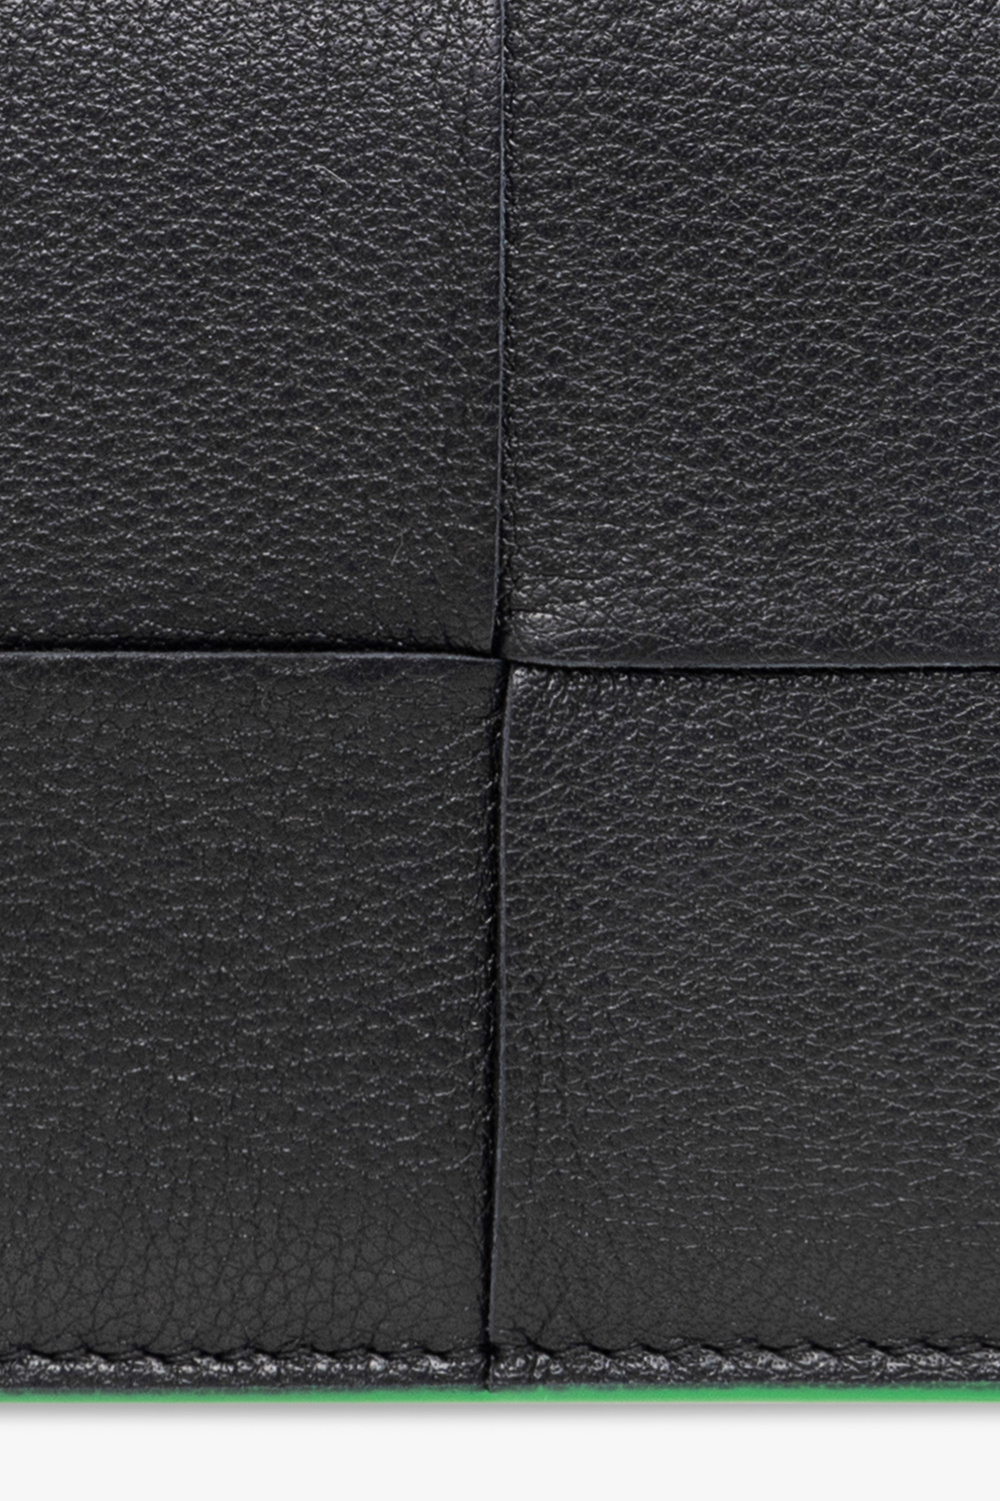 bottega tinted Veneta Bi-fold wallet